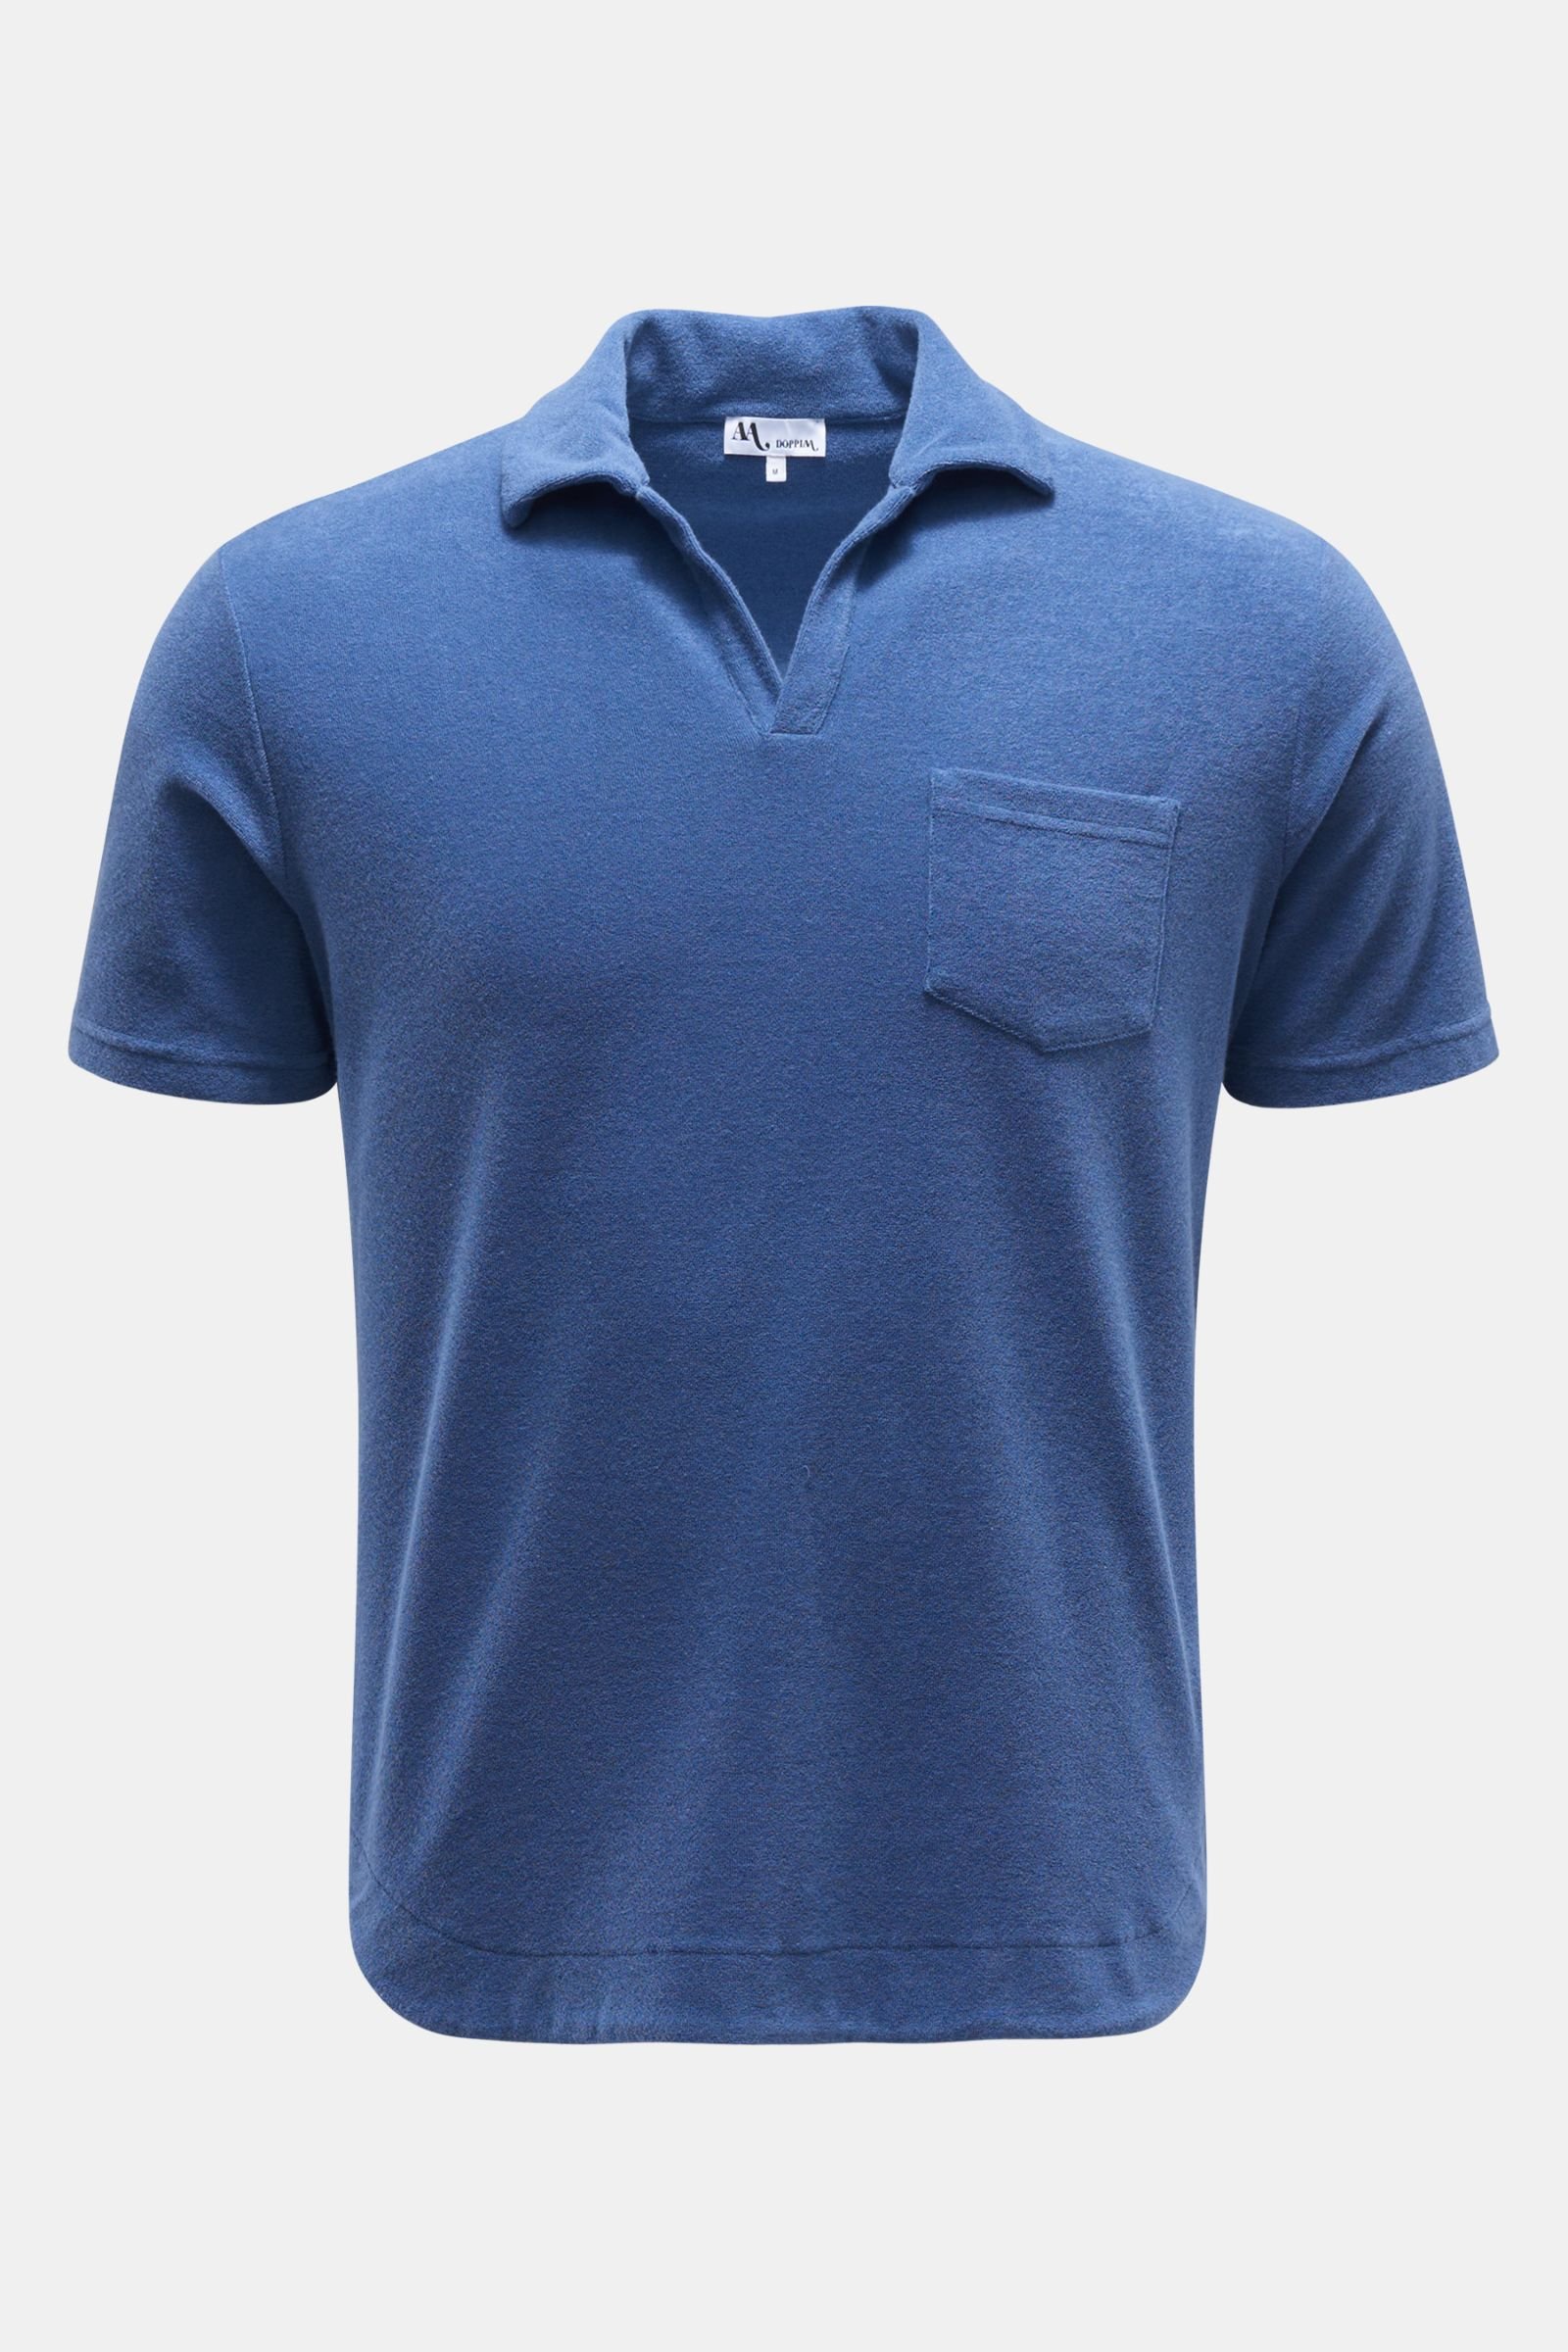 Terry polo shirt 'Aattilio' grey-blue